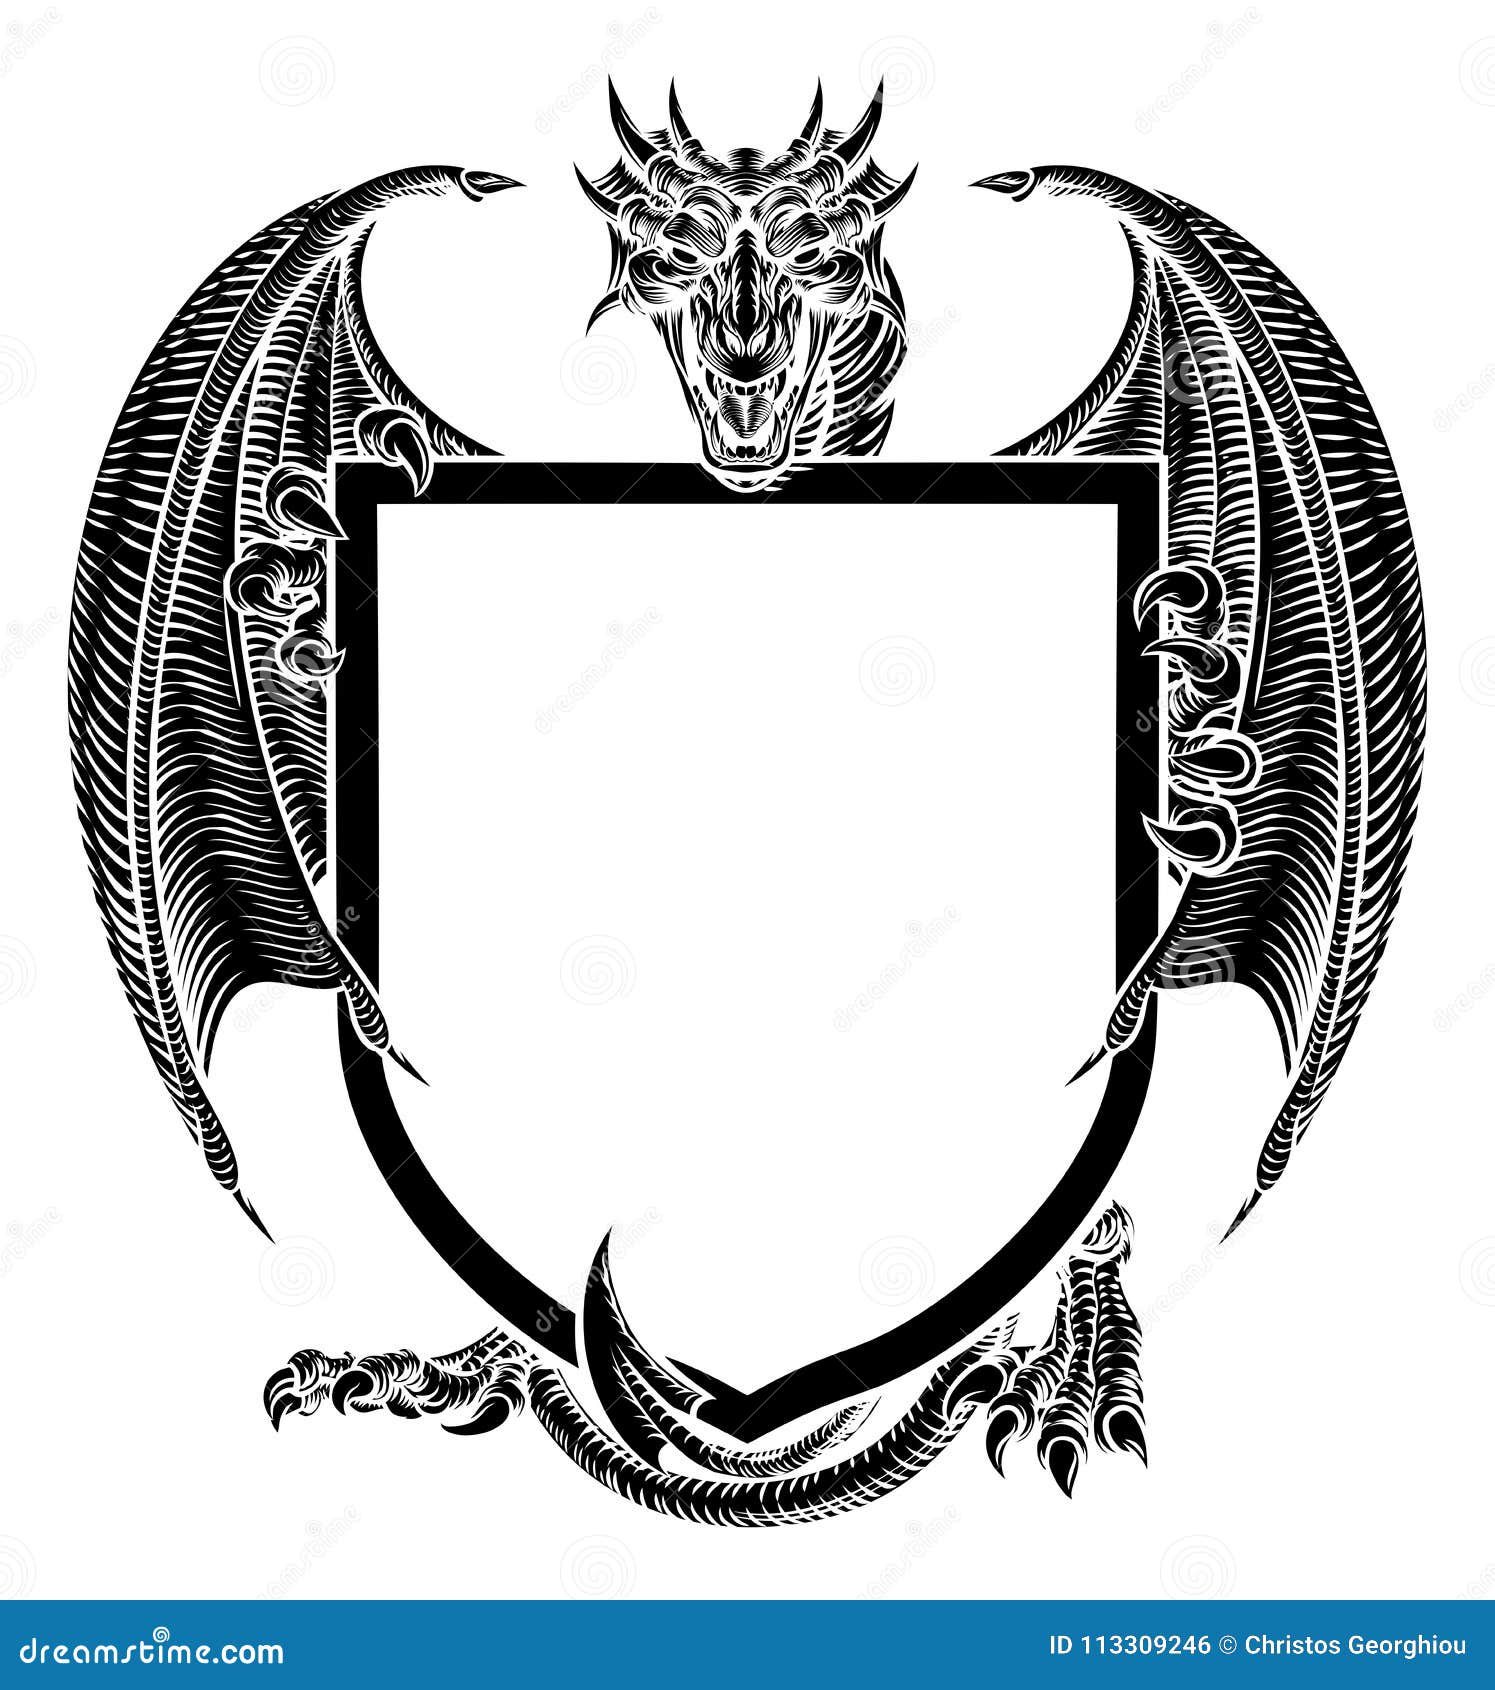 dragon crest heraldic coat of arms shield emblem